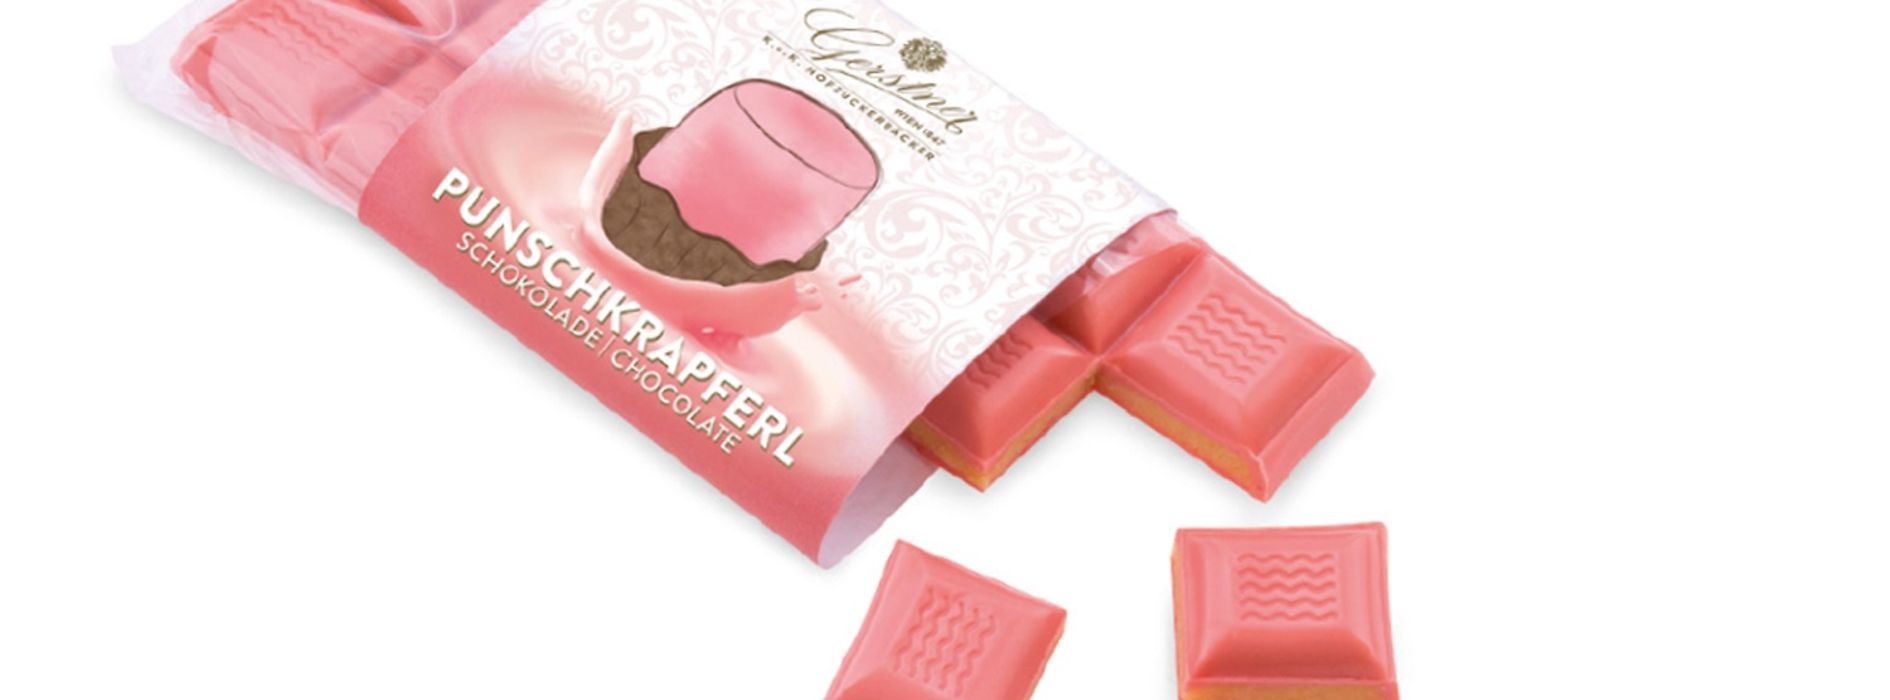 Punschkrapferlschokolade (chocolat rose au rhum et à la confiture d'abricot)